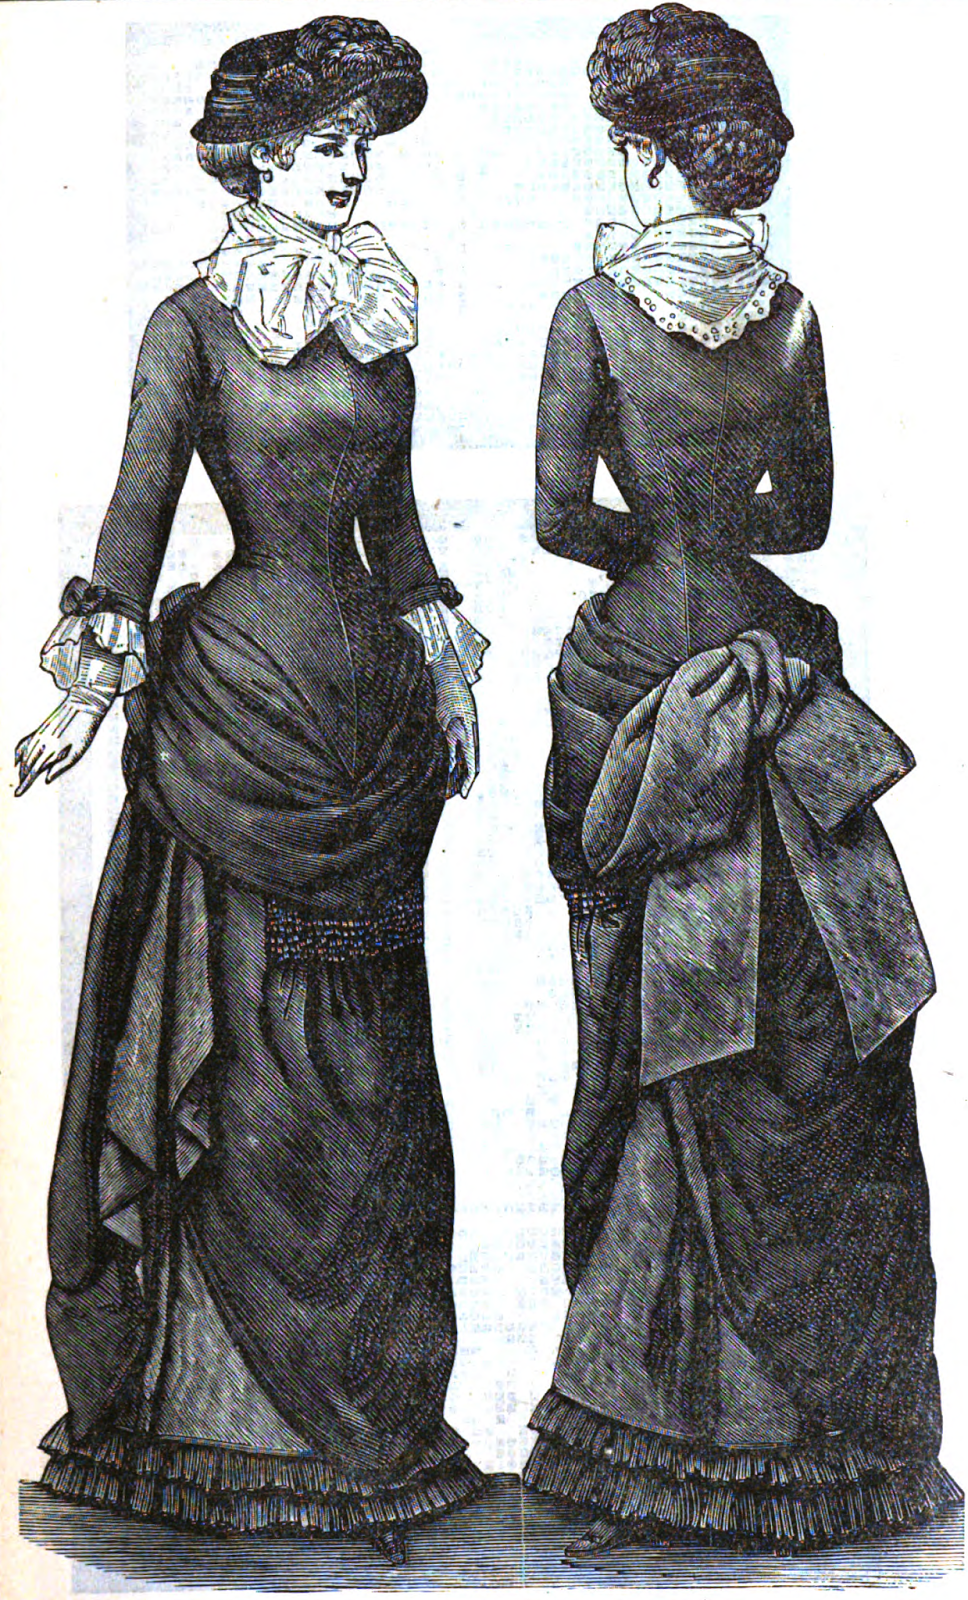 womens dress 19th century